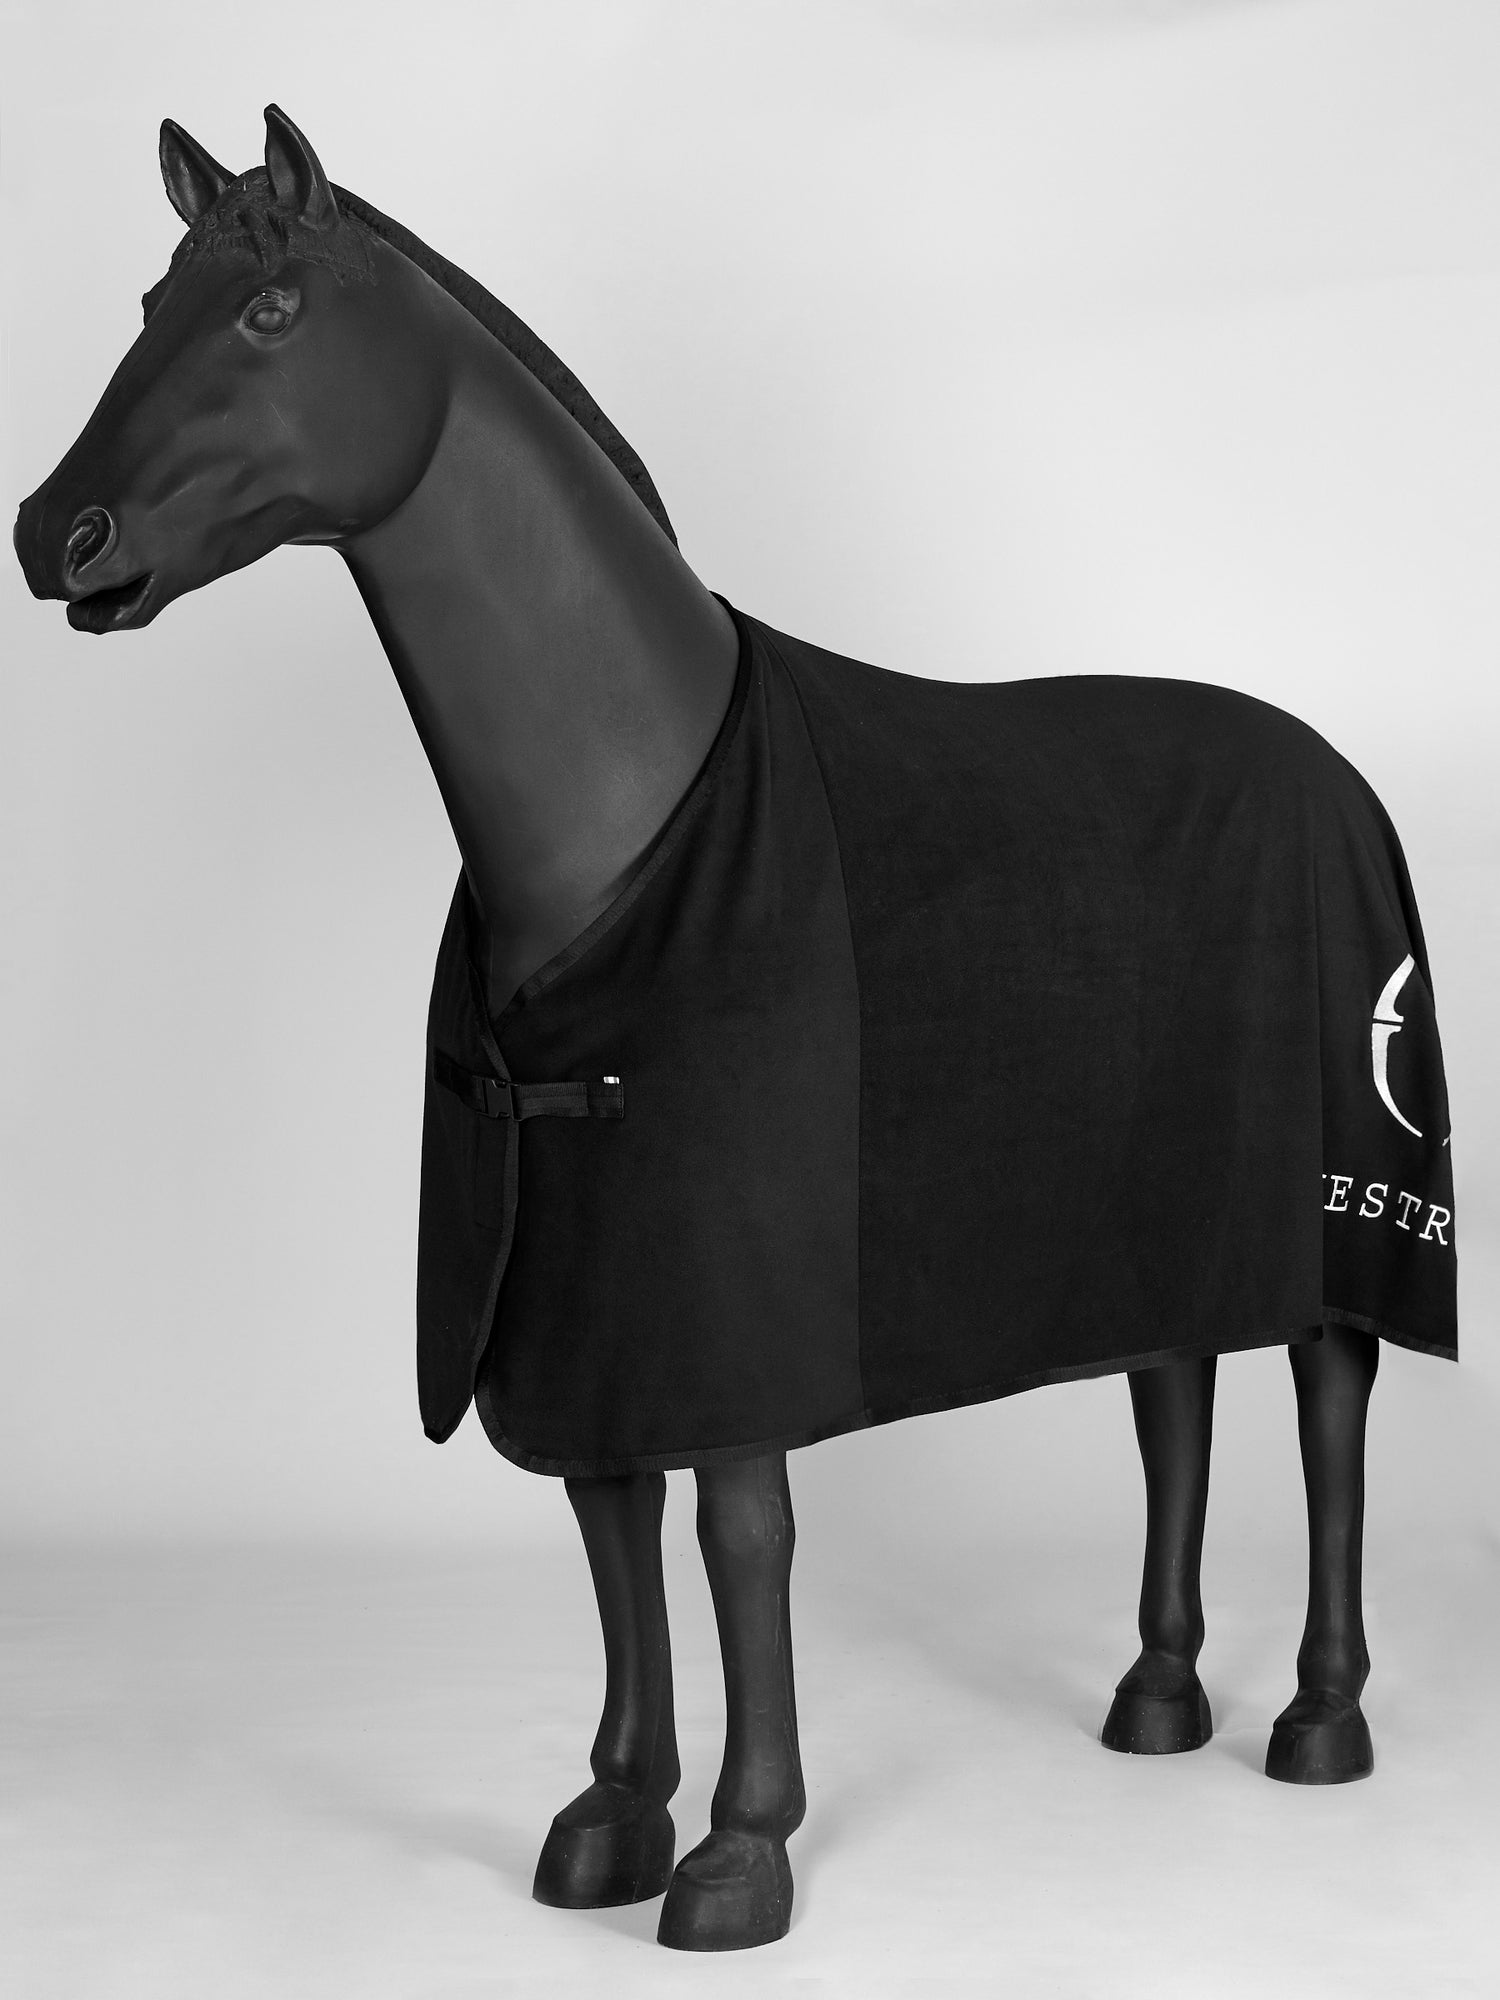 Vestrum equestrian horse fleece rug